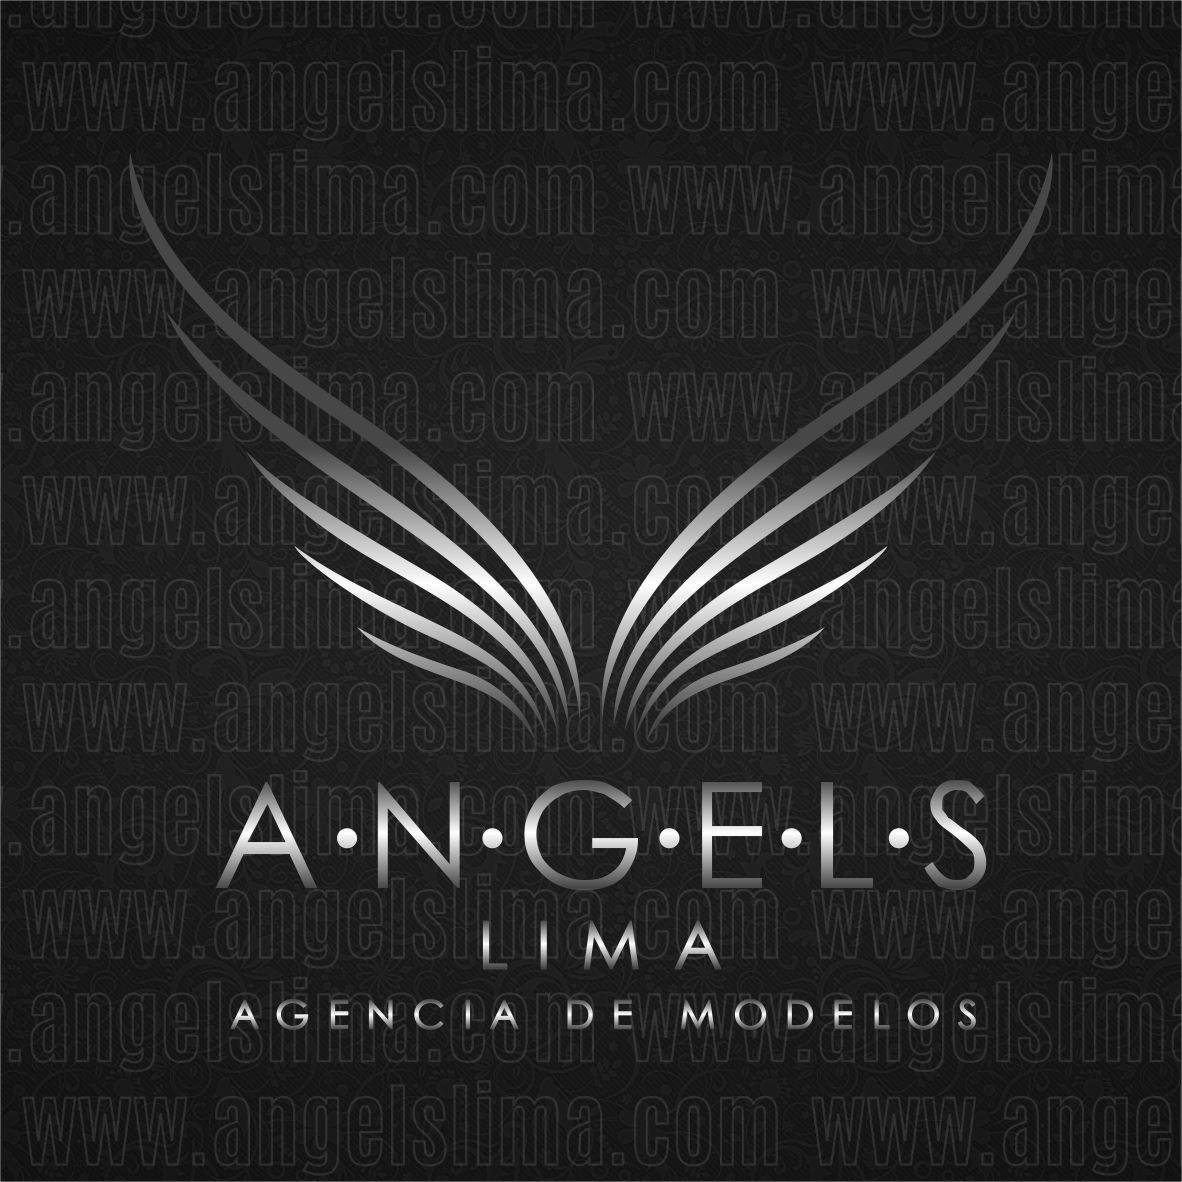 Agencia de Modelos Angels Lima